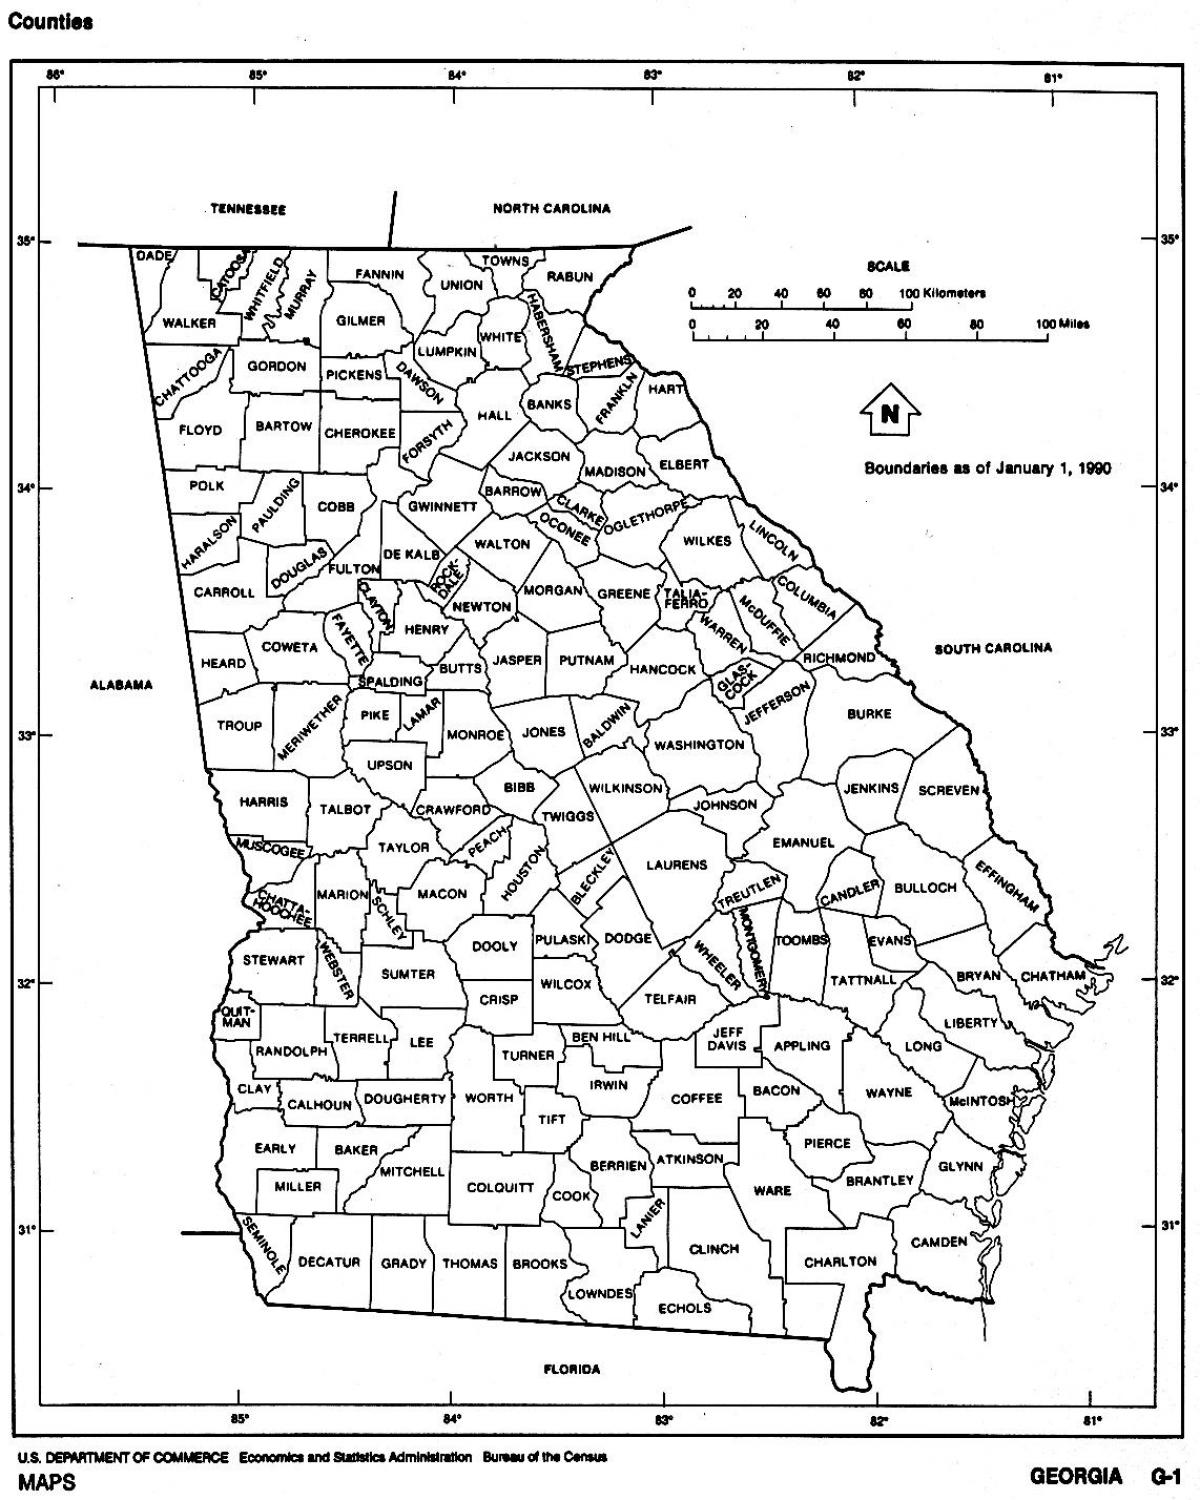 Georgia state mapu